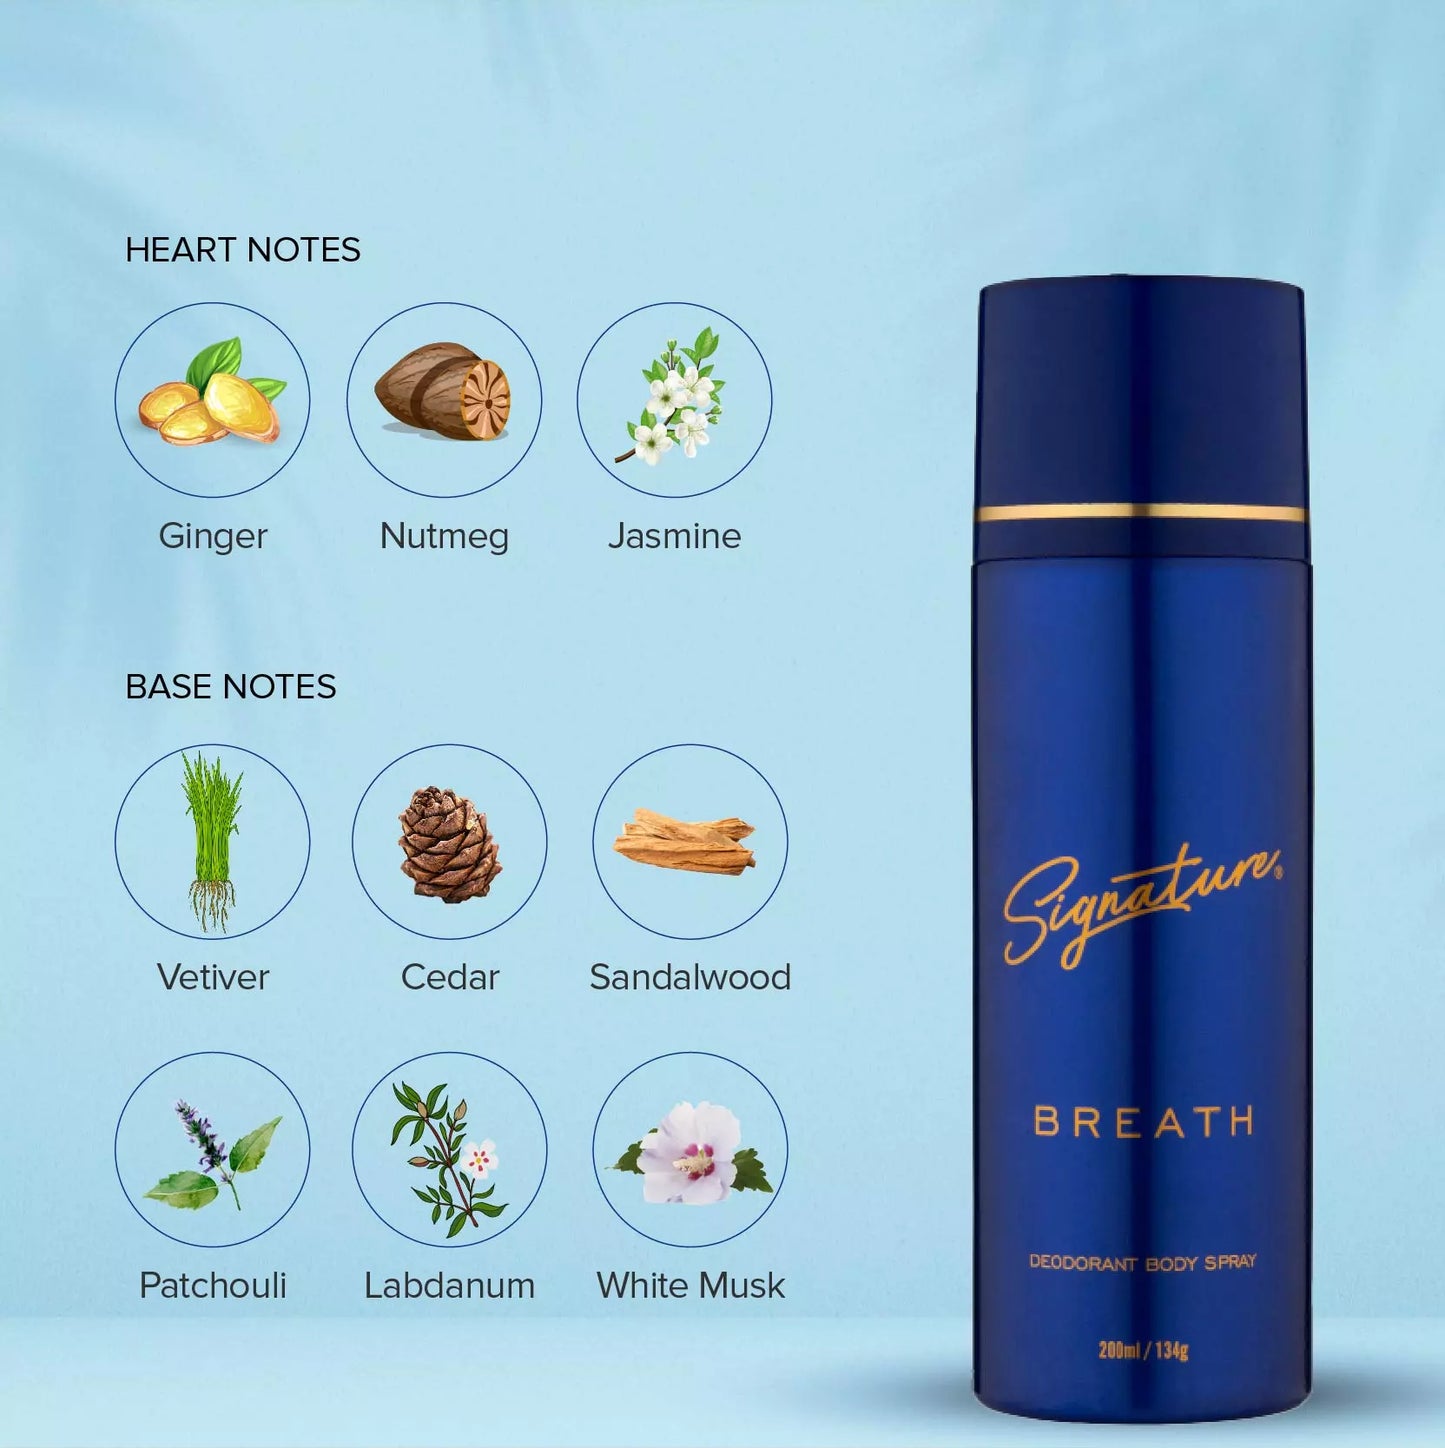 Signature Perfume Body Spray - "BREATH" - 200 ML